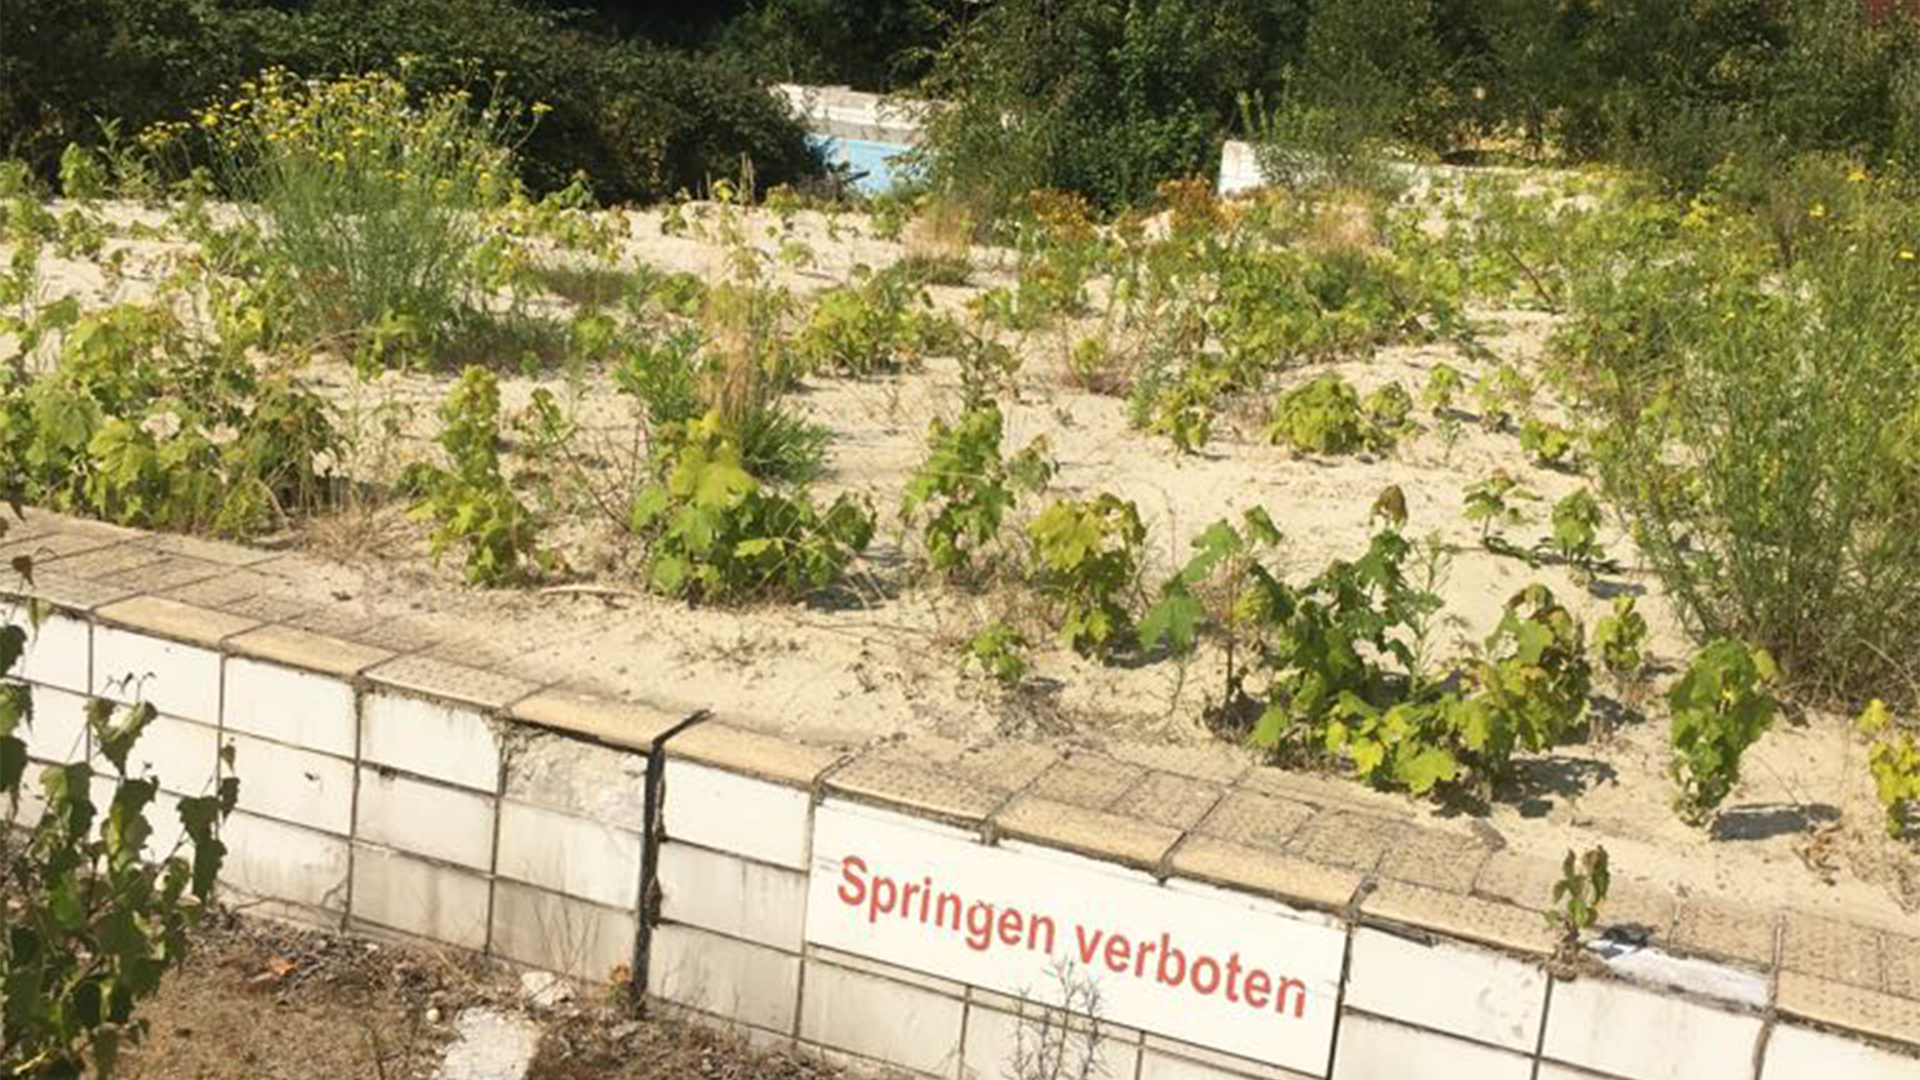 https://www.tagesschau.de/multimedia/bilder/ruine-schwimmbad-duisburg-107~_v-modPremiumHalb.jpg